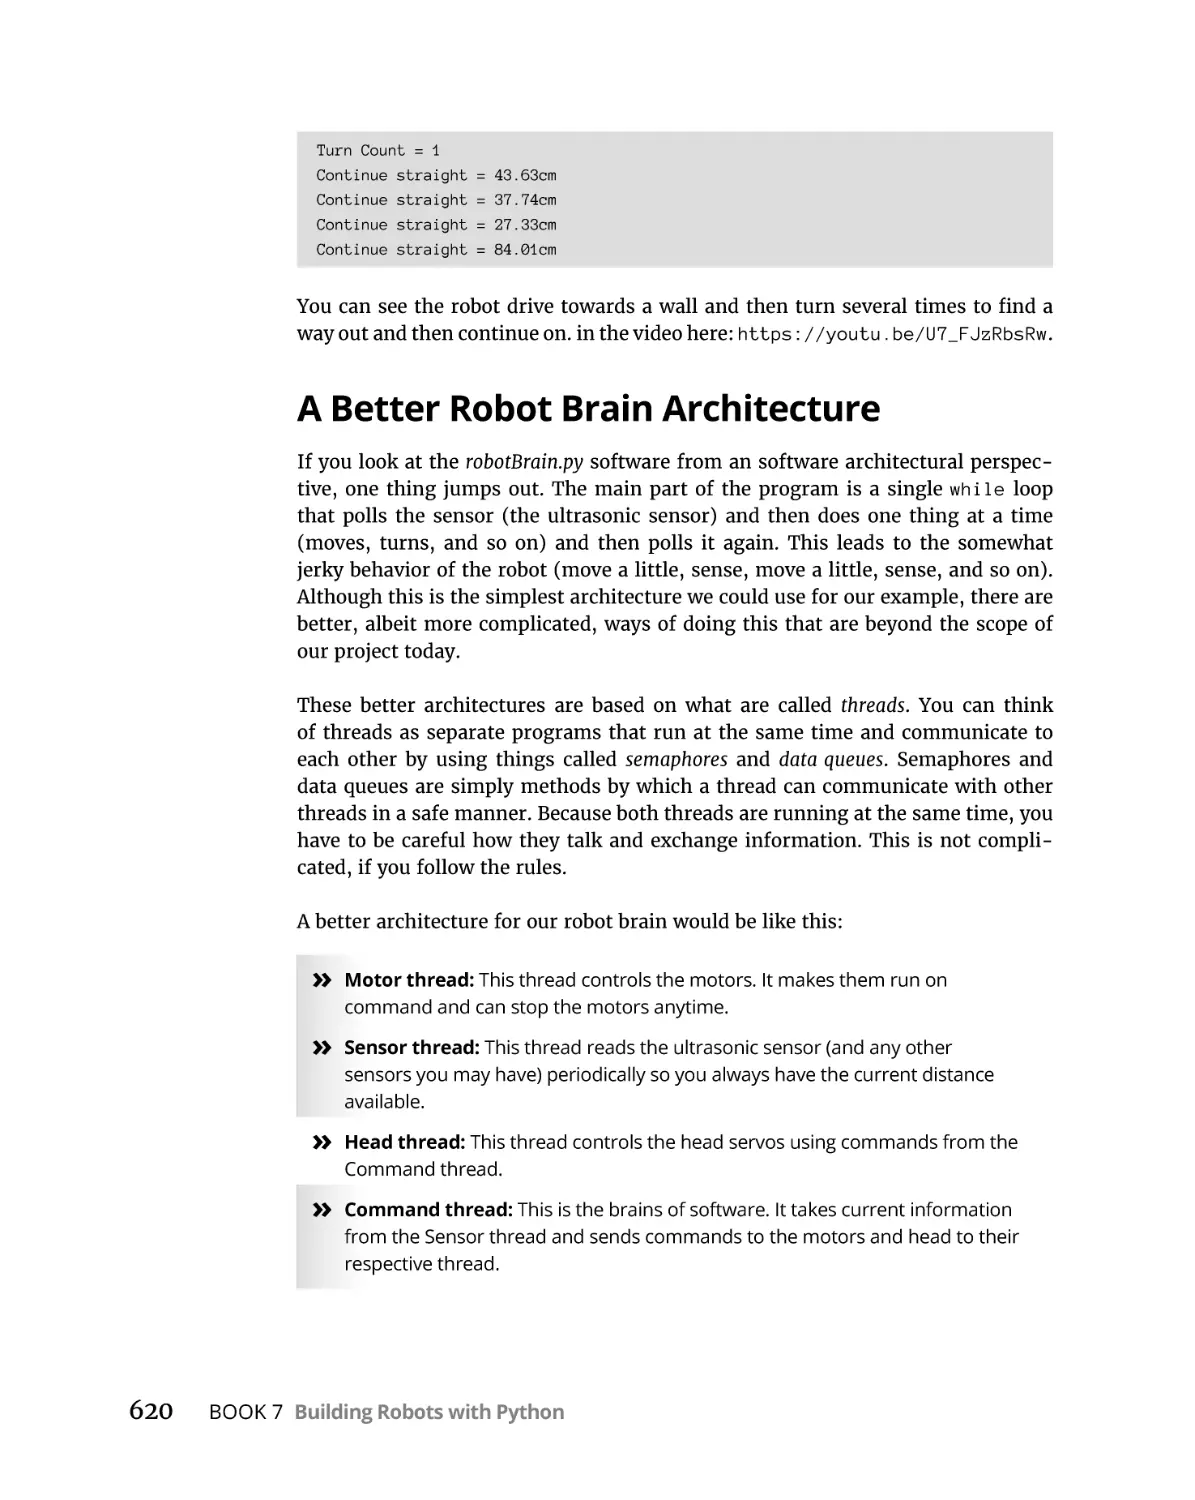 A Better Robot Brain Architecture